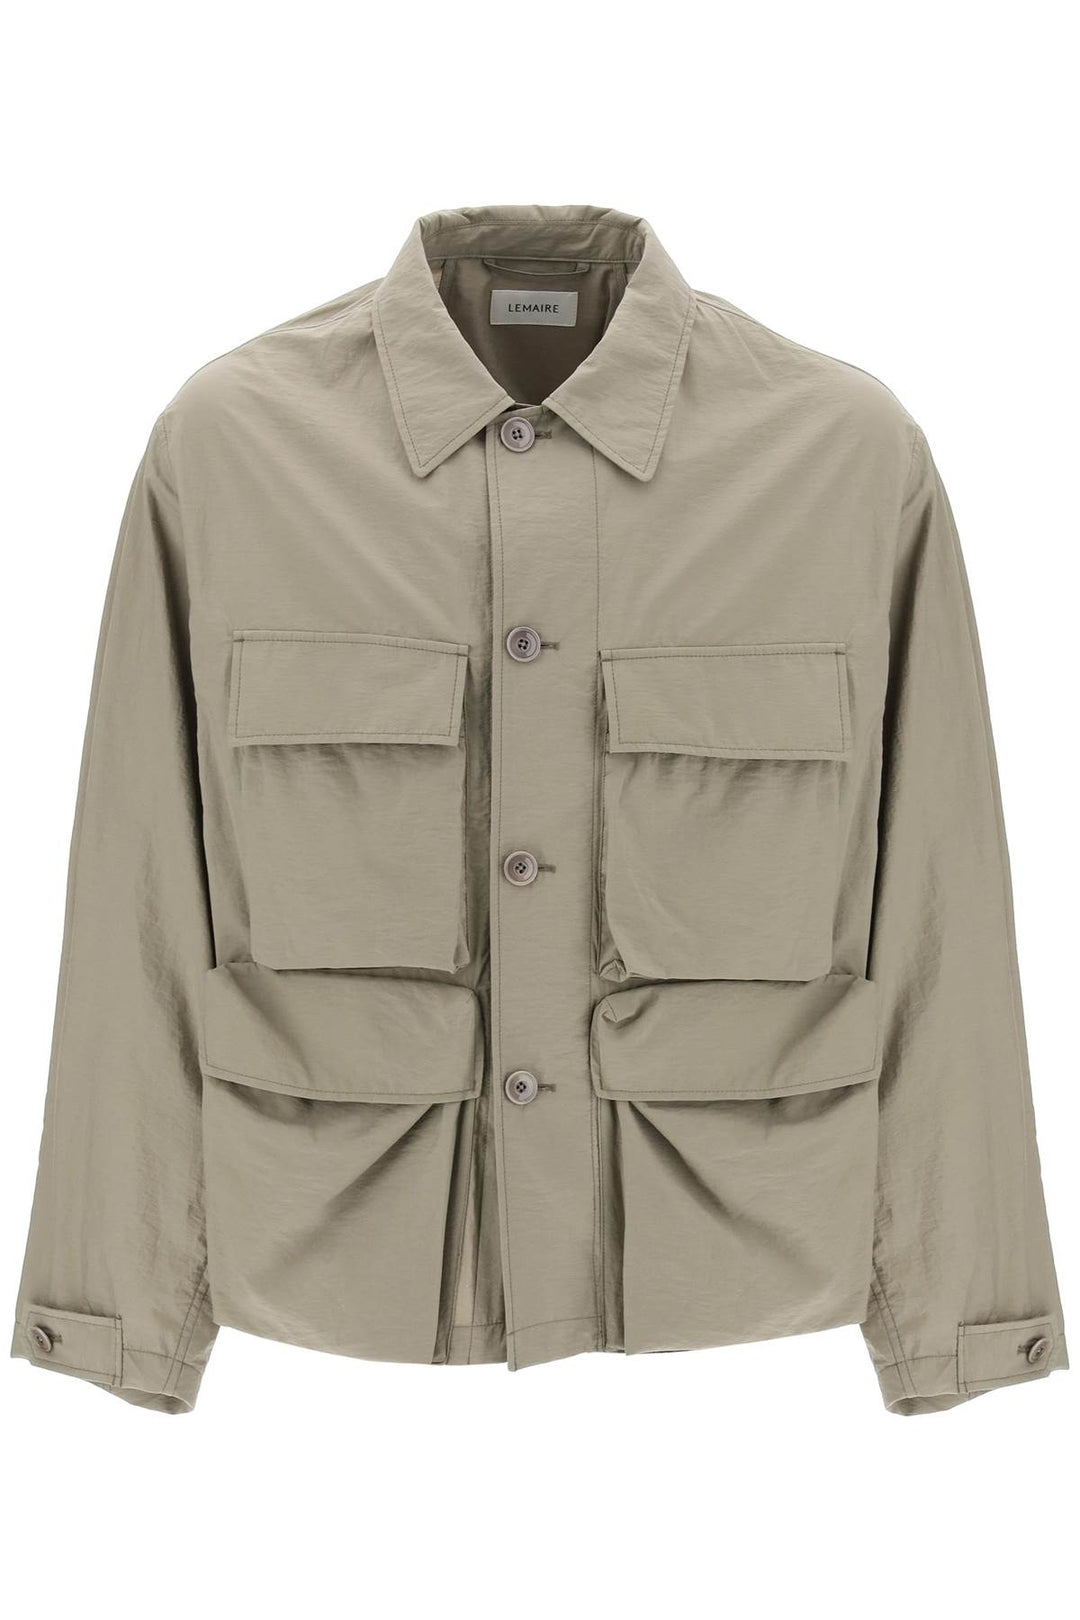 Lemaire lightweight multi-pocket jacket-0